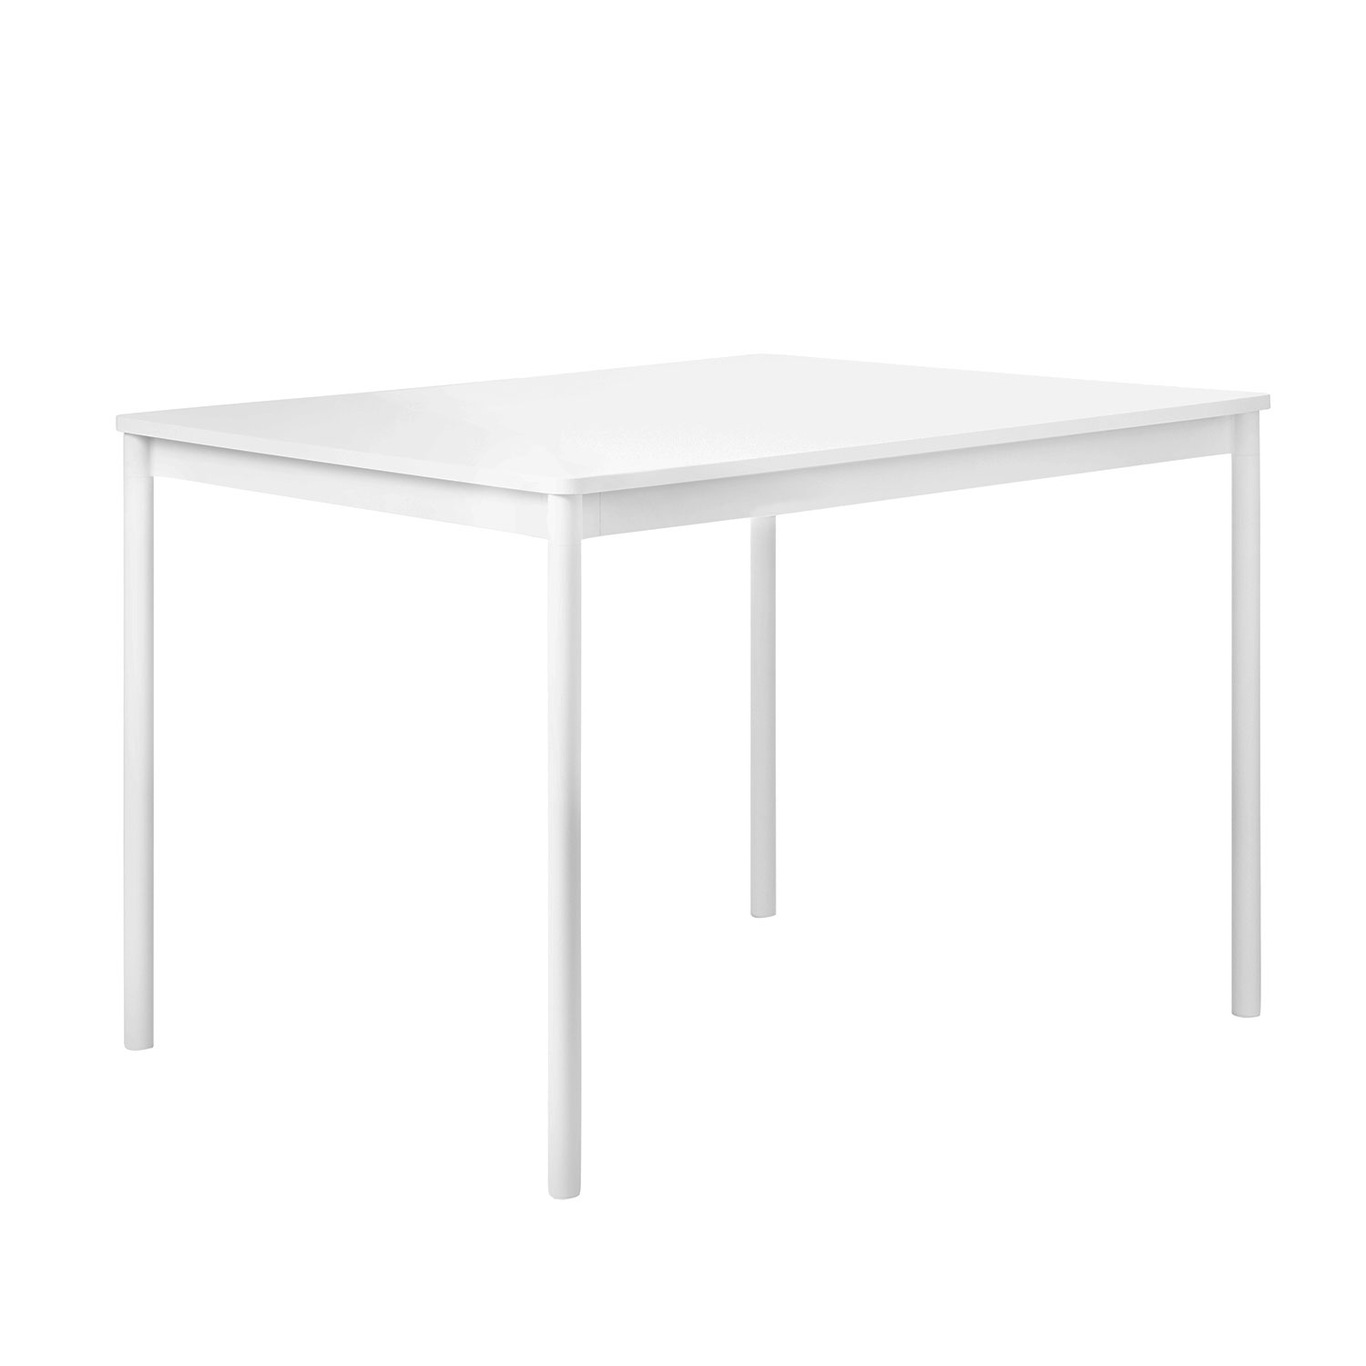 Base Table Matbord 140x80 cm, Vit